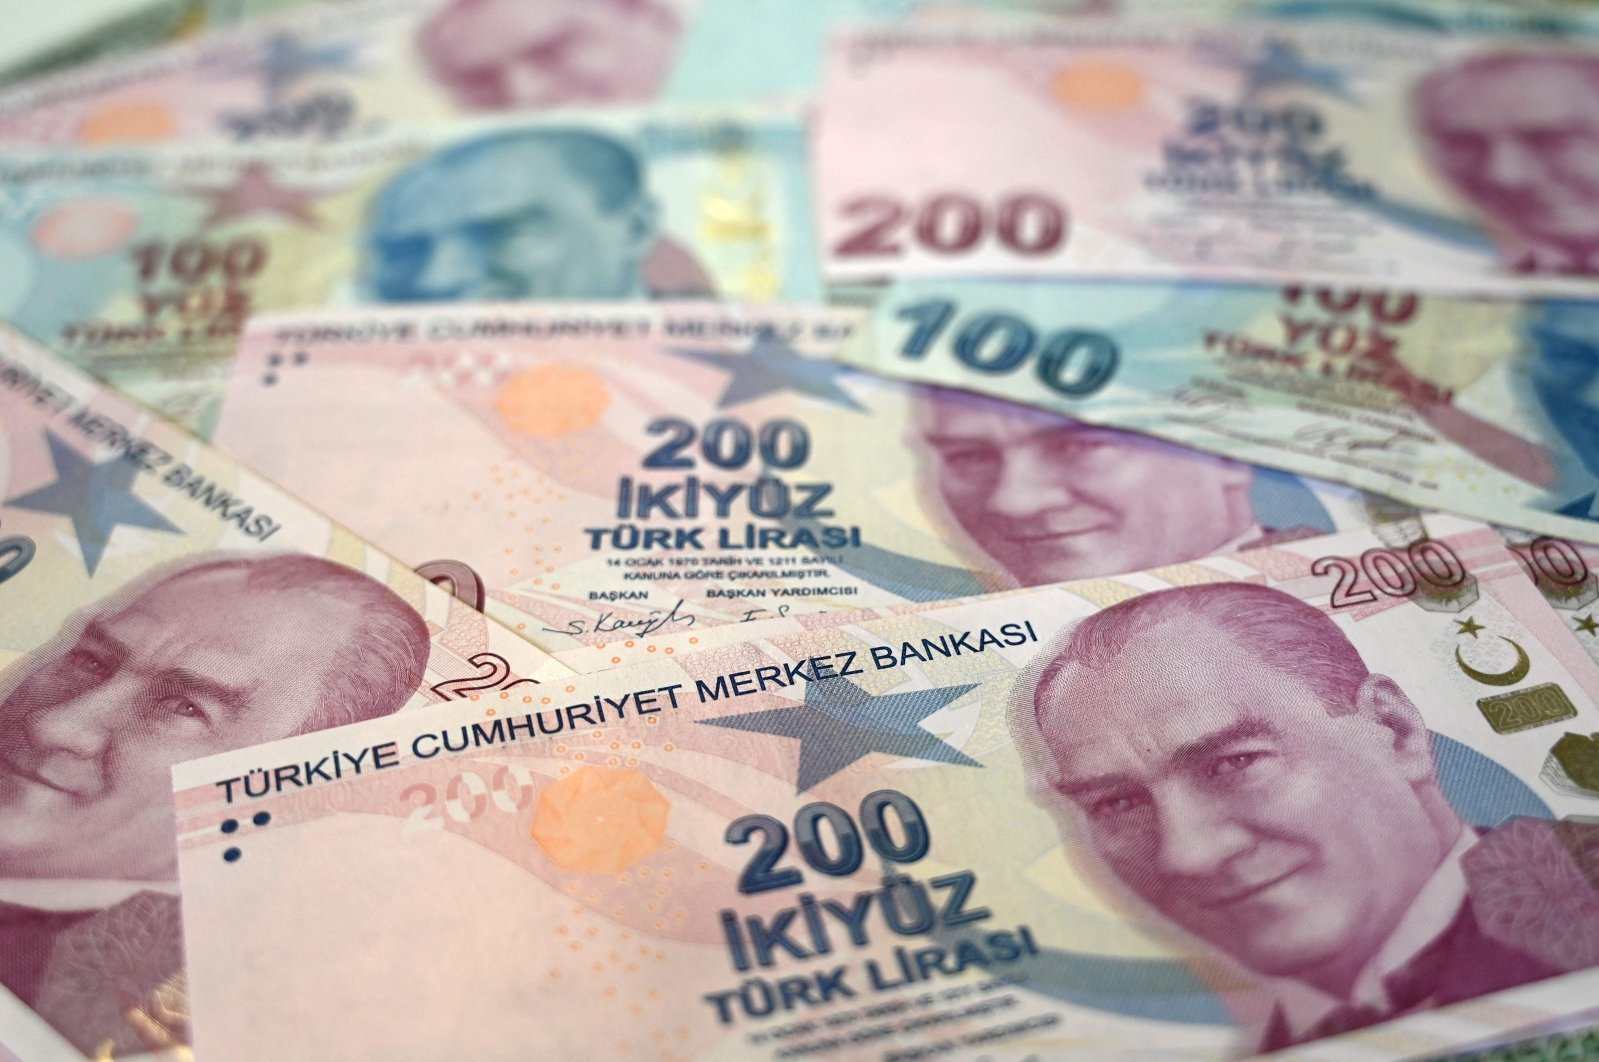 Turkish lira banknotes on display in Istanbul, Turkey, Dec. 7, 2021. (AFP Photo)